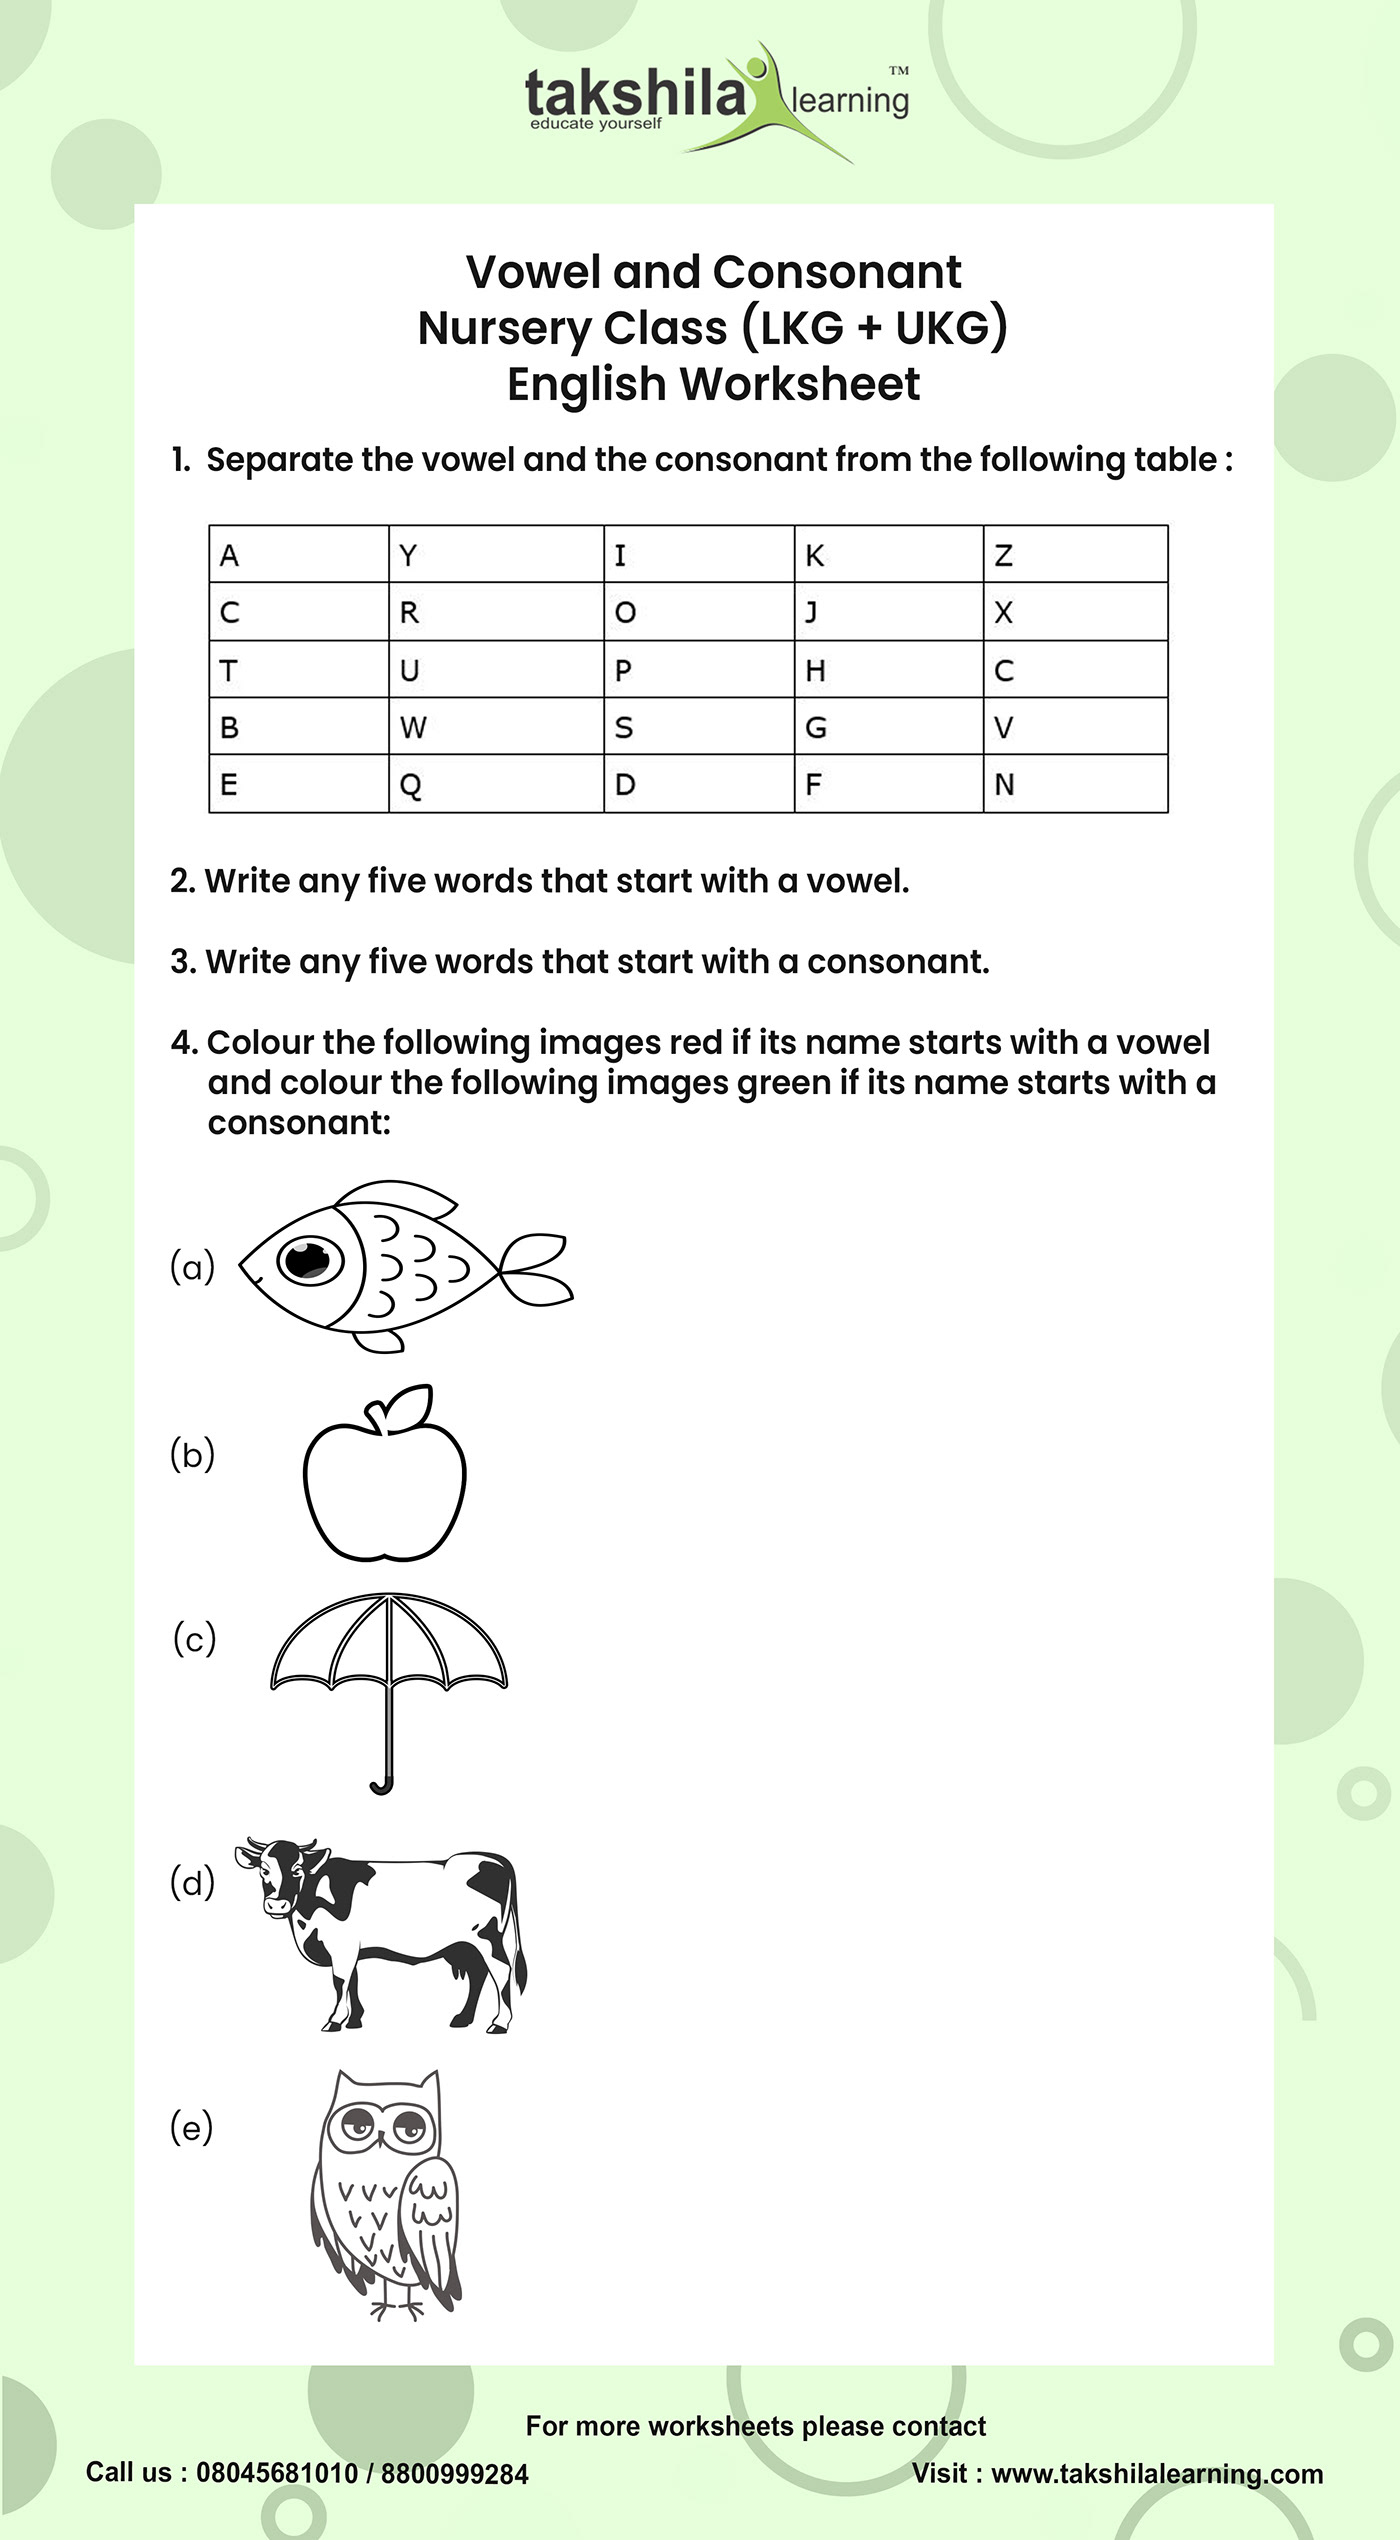 Consonants english English School Nursery classes text Vowel vowels